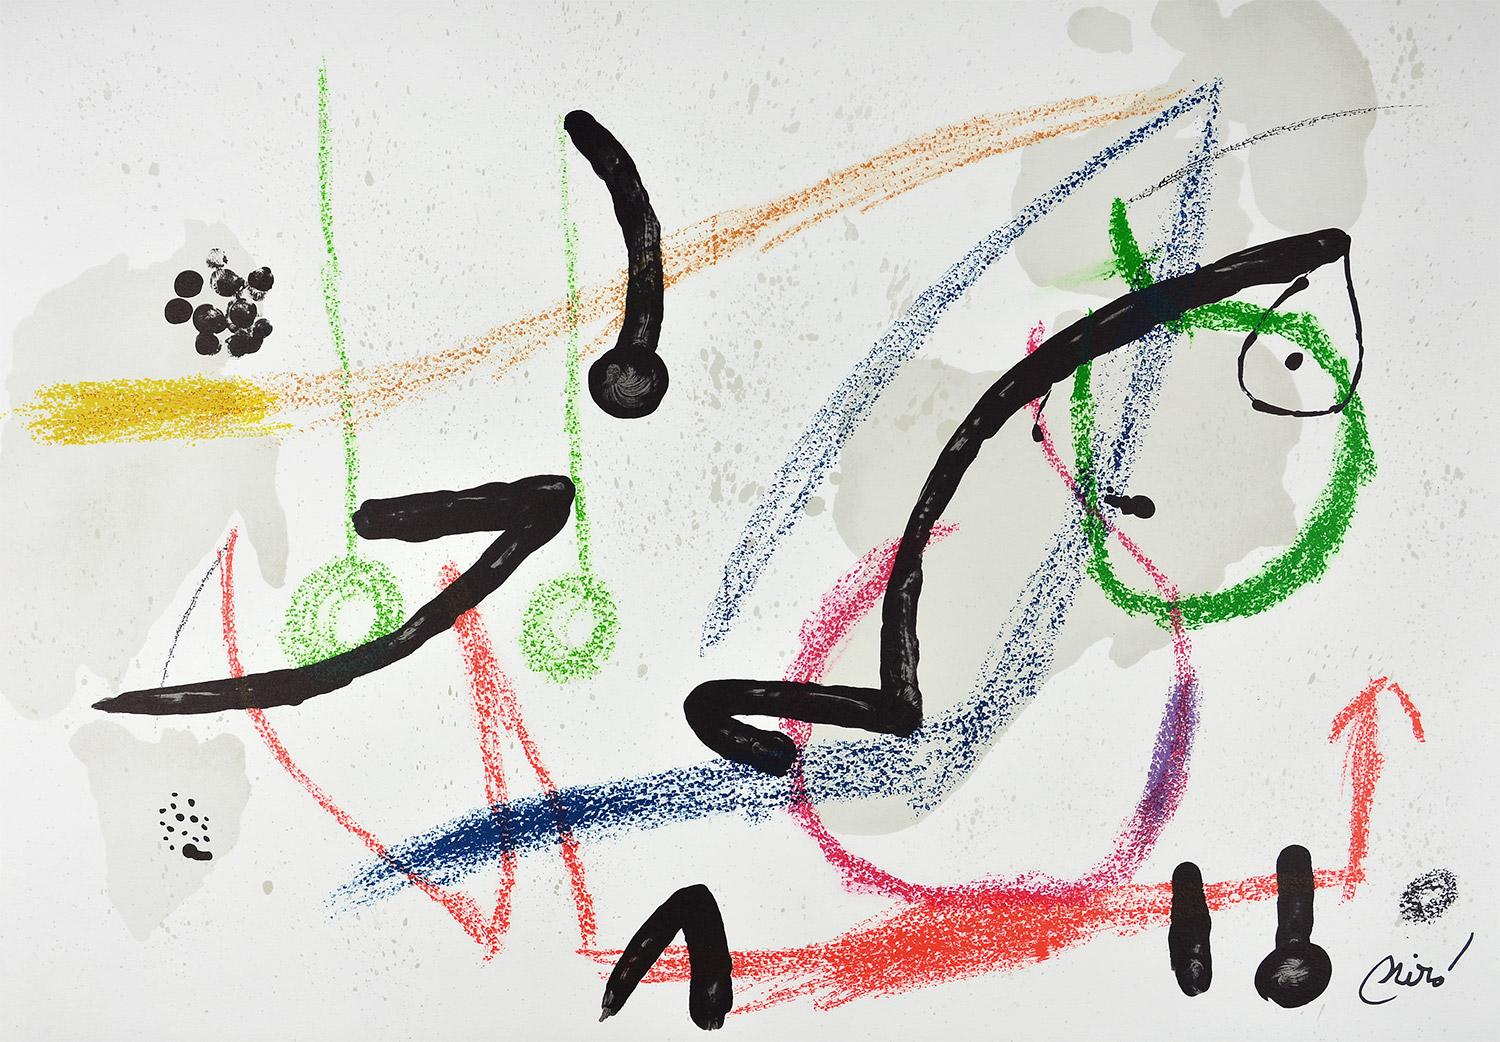 Joan Miró - Maravillas con variaciones acrósticas en el jardín de Miró VII
Datum der Gründung: 1975
Medium: Lithographie auf Gvarro-Papier
Auflage: 1500
Größe: 49,5 x 71 cm
Beobachtungen: Lithographie auf Gvarro-Papierplatte signiert. Herausgegeben